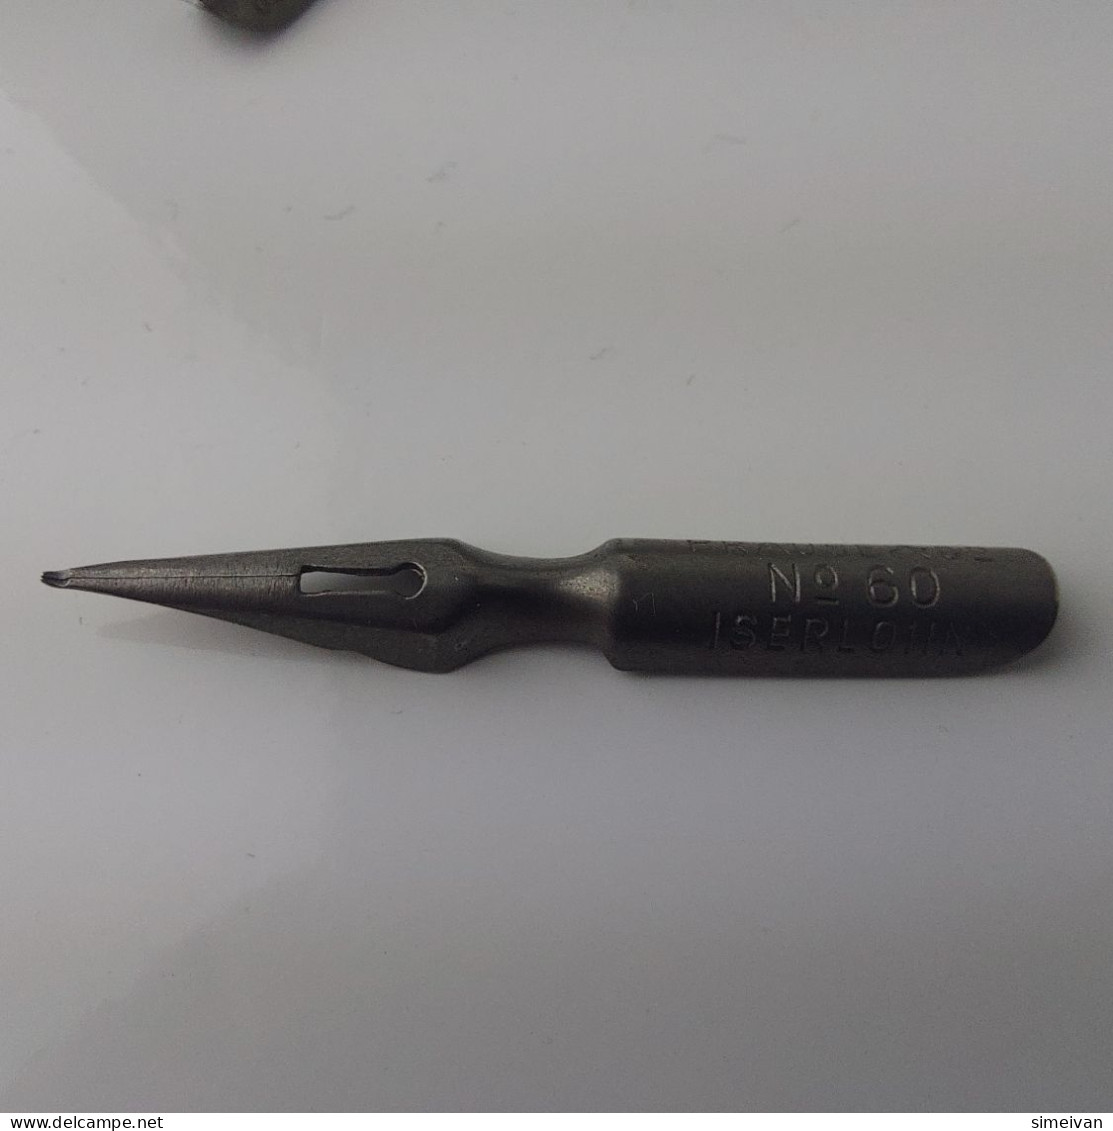 Vintage Dip Pen Nibs BRAUSE & Co No. 60 ISERLOHN Feder 16 Pcs Calligraphy #5563 - Schreibgerät